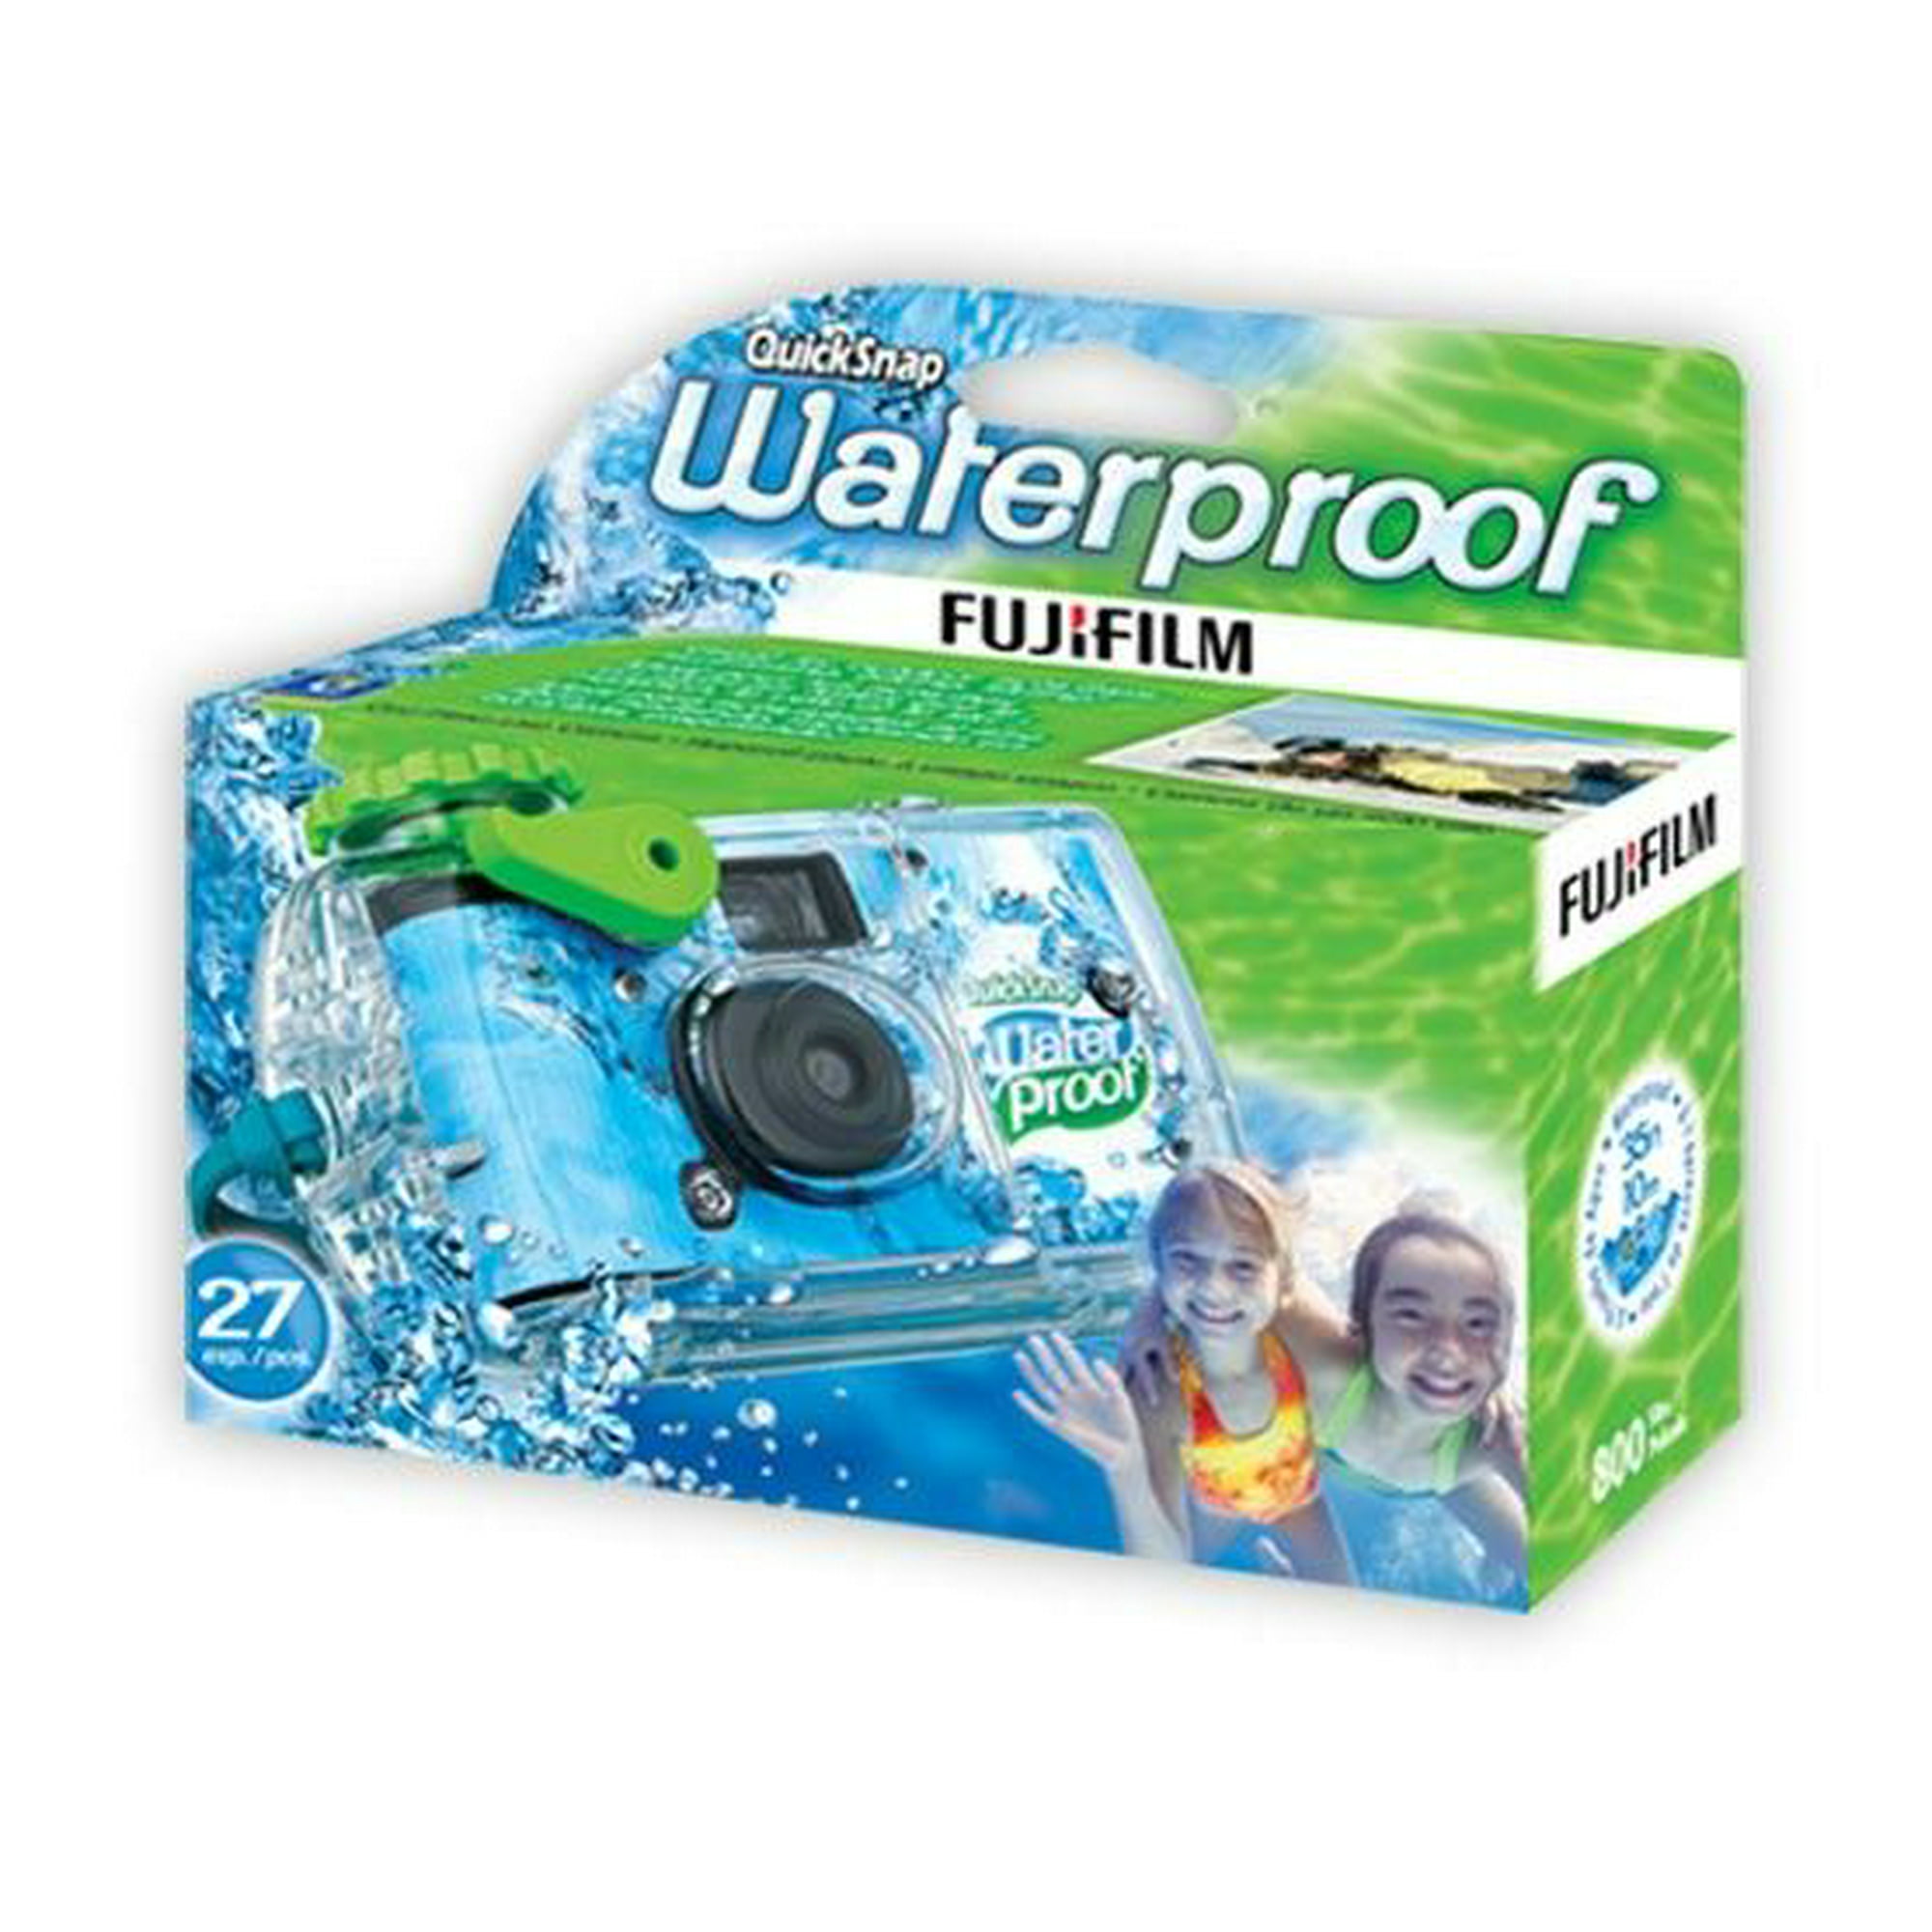 acuática Fujifilm Waterproof | Walmart línea